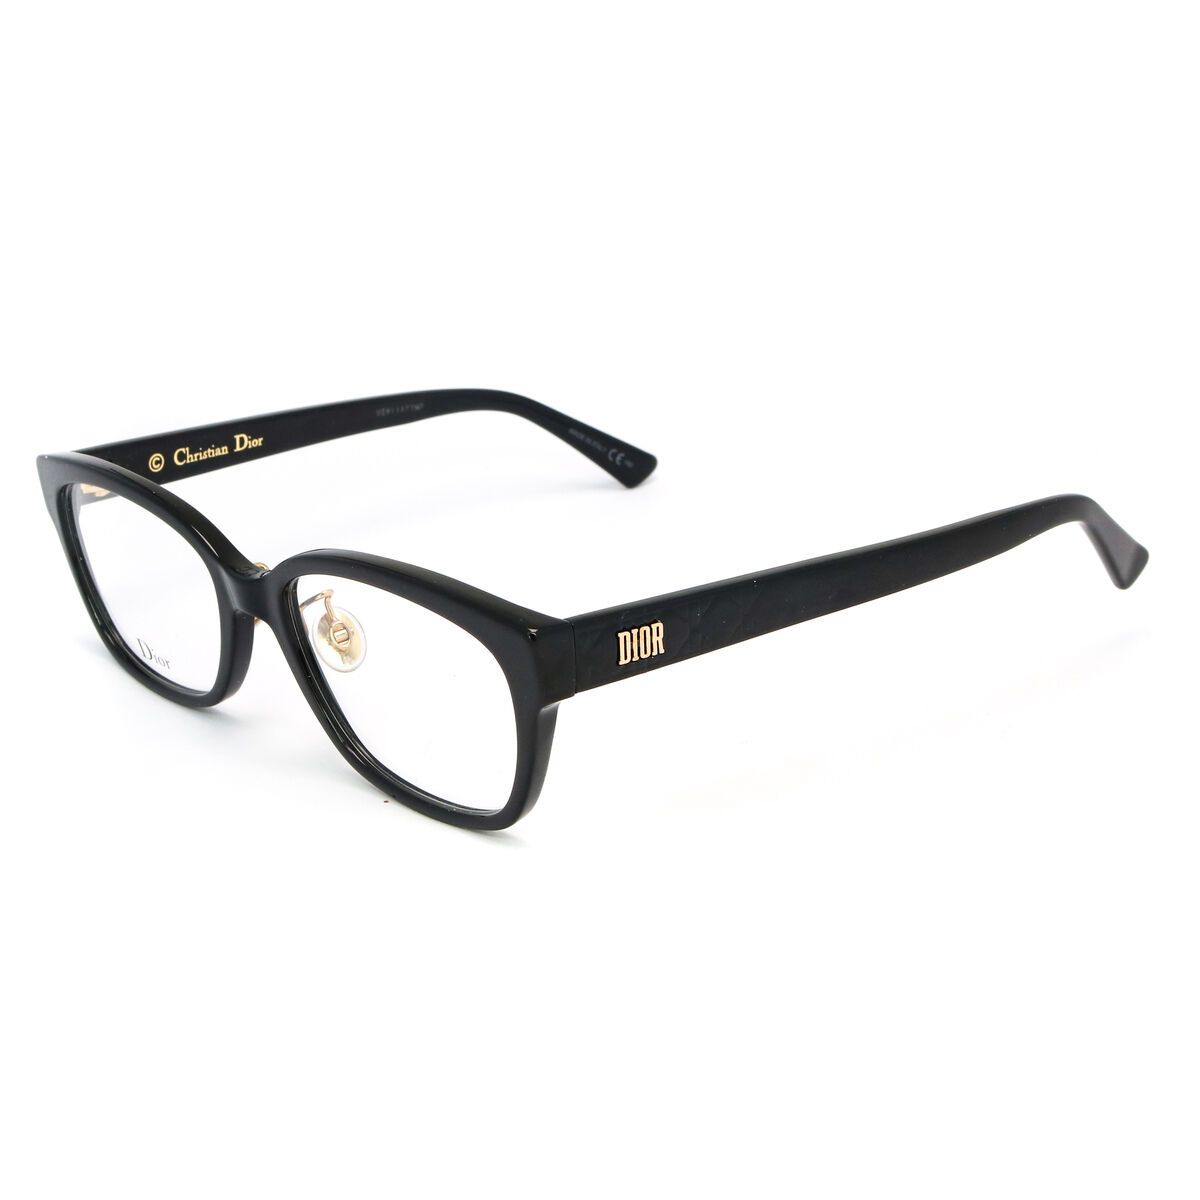 LADYDIOR02F Pillow Eyeglasses 807 - size  53